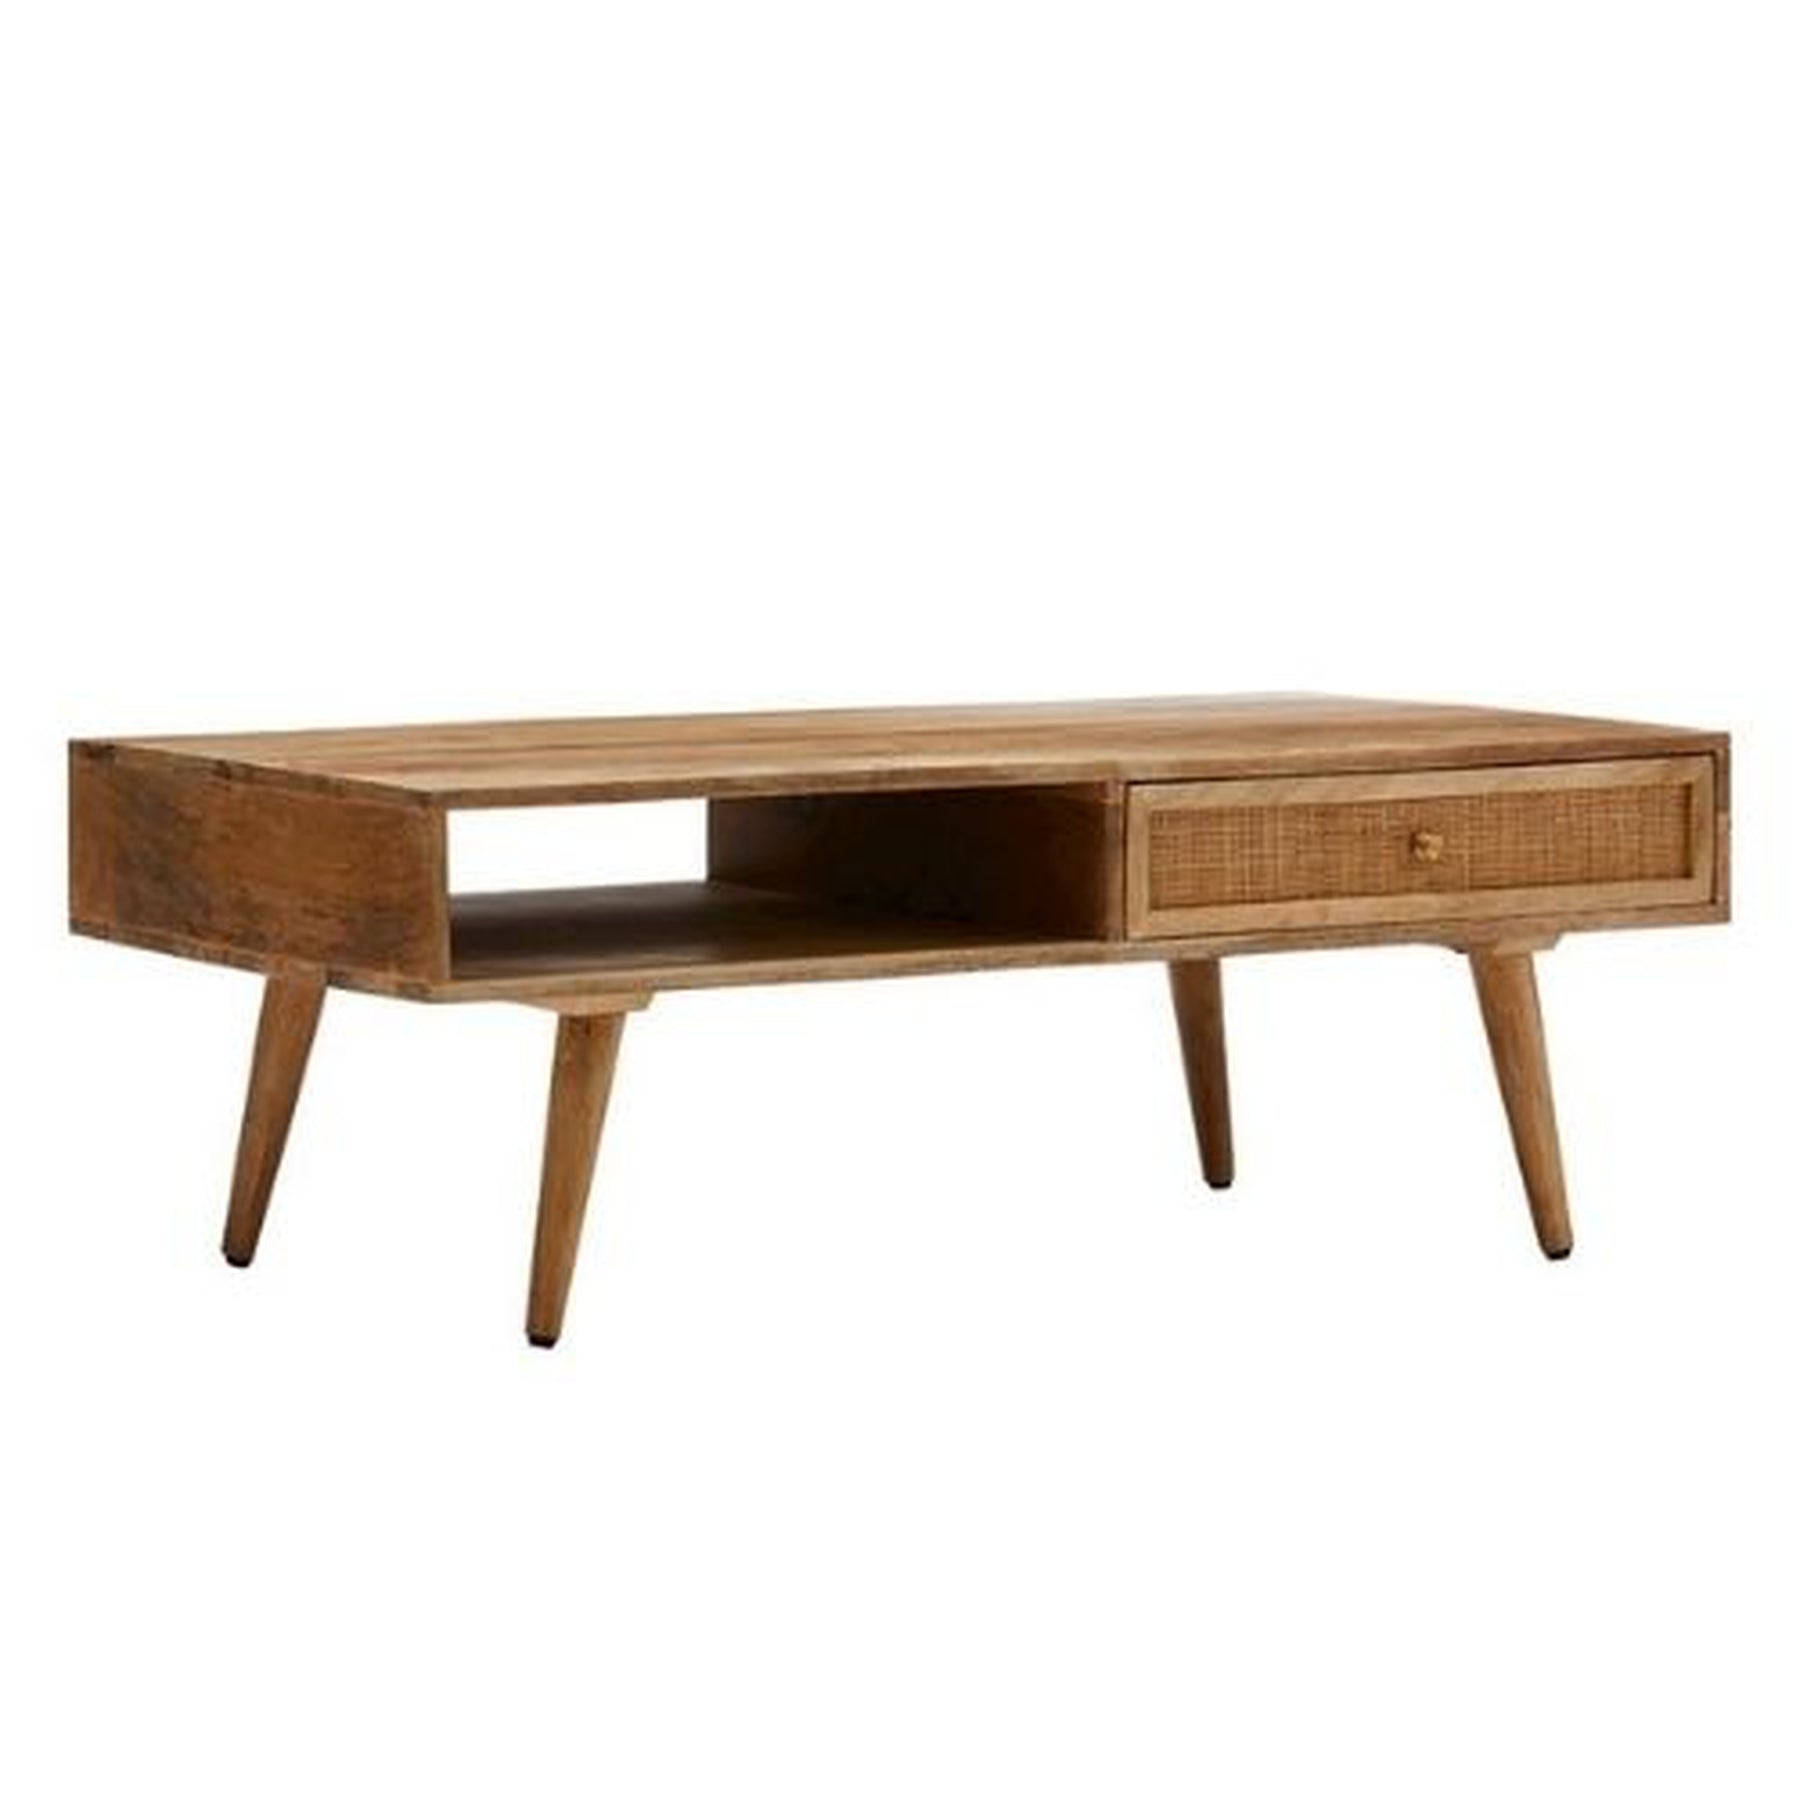 Wooden Straw Range 1 Drawer Open Shelf Coffee Table - Coffee table - Modern Coffee Table | 45x24x16 inches